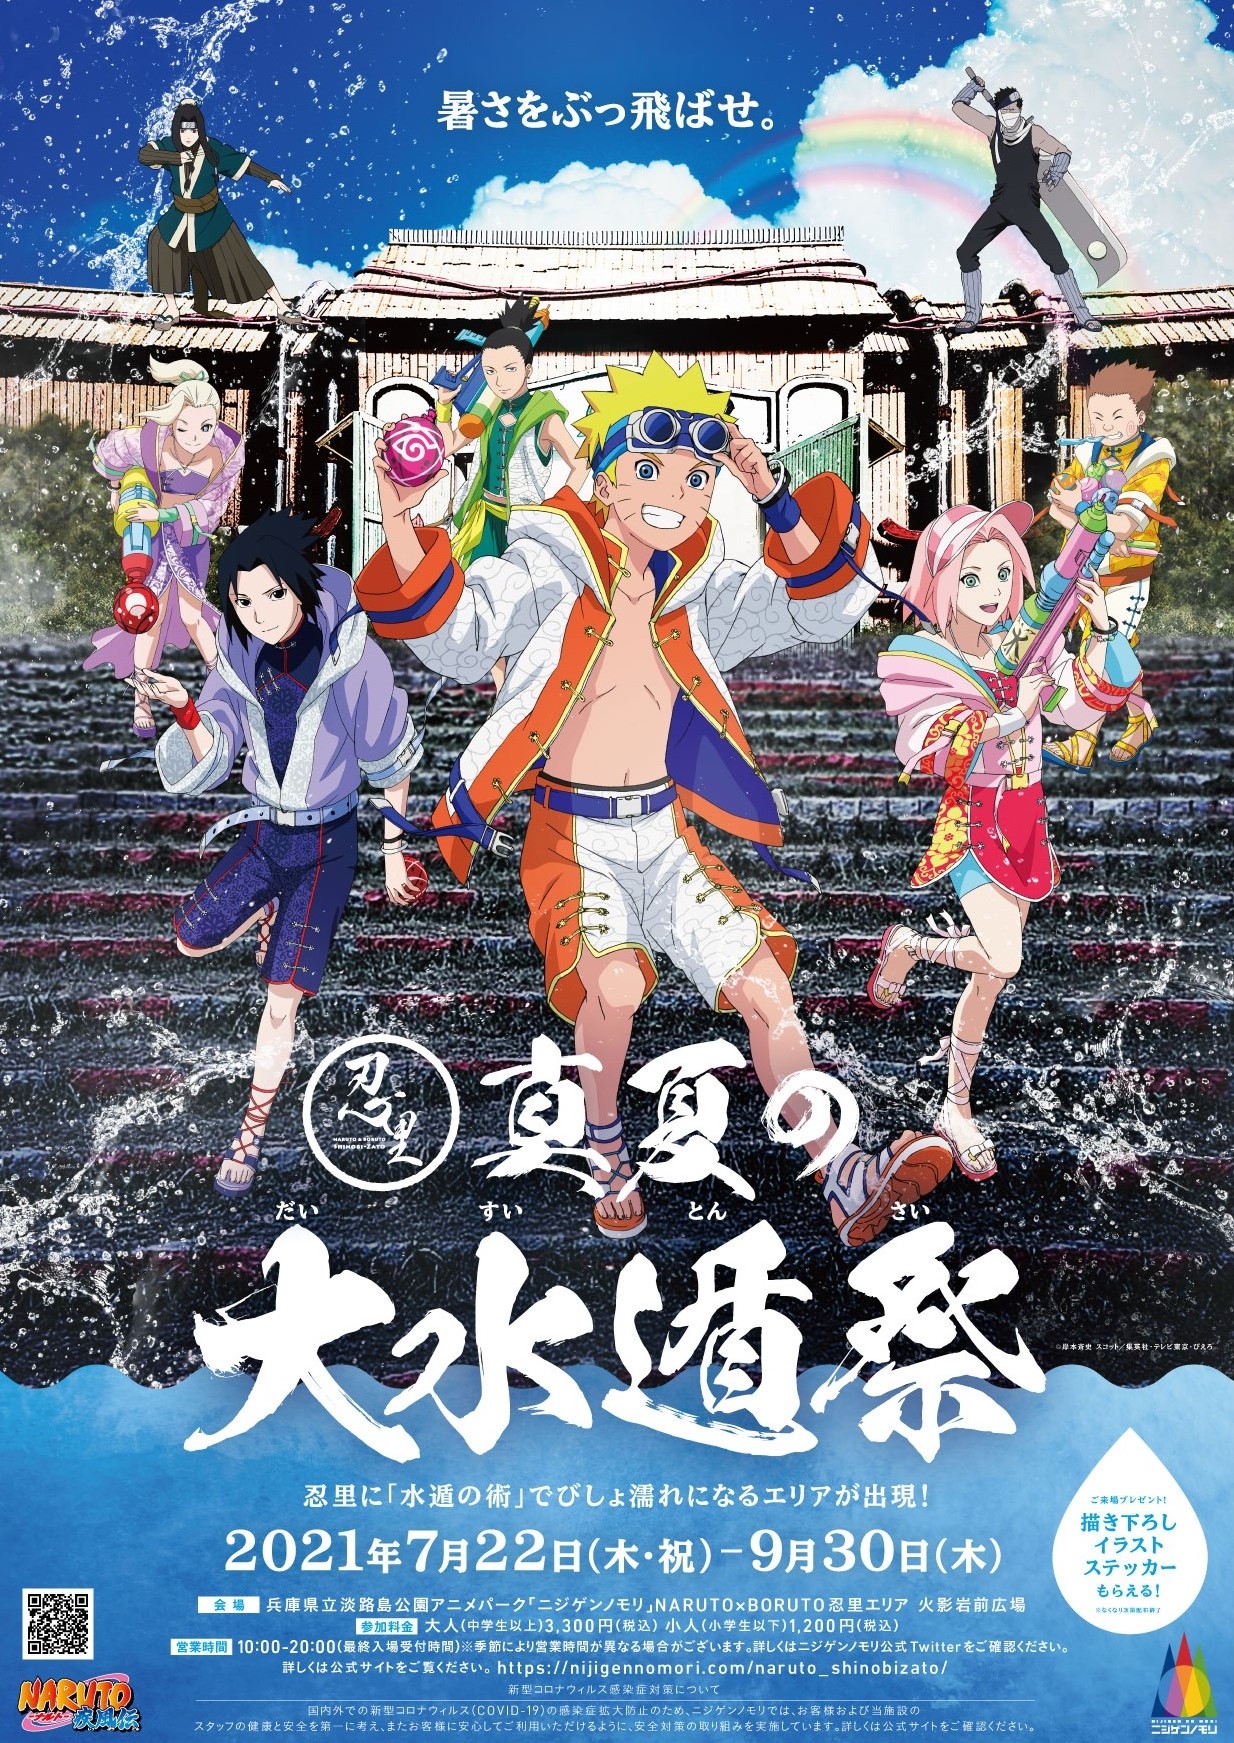 Boruto Uzumaki Naruto's Son Next Generation Anime 4 x 5 Full Color Sticker